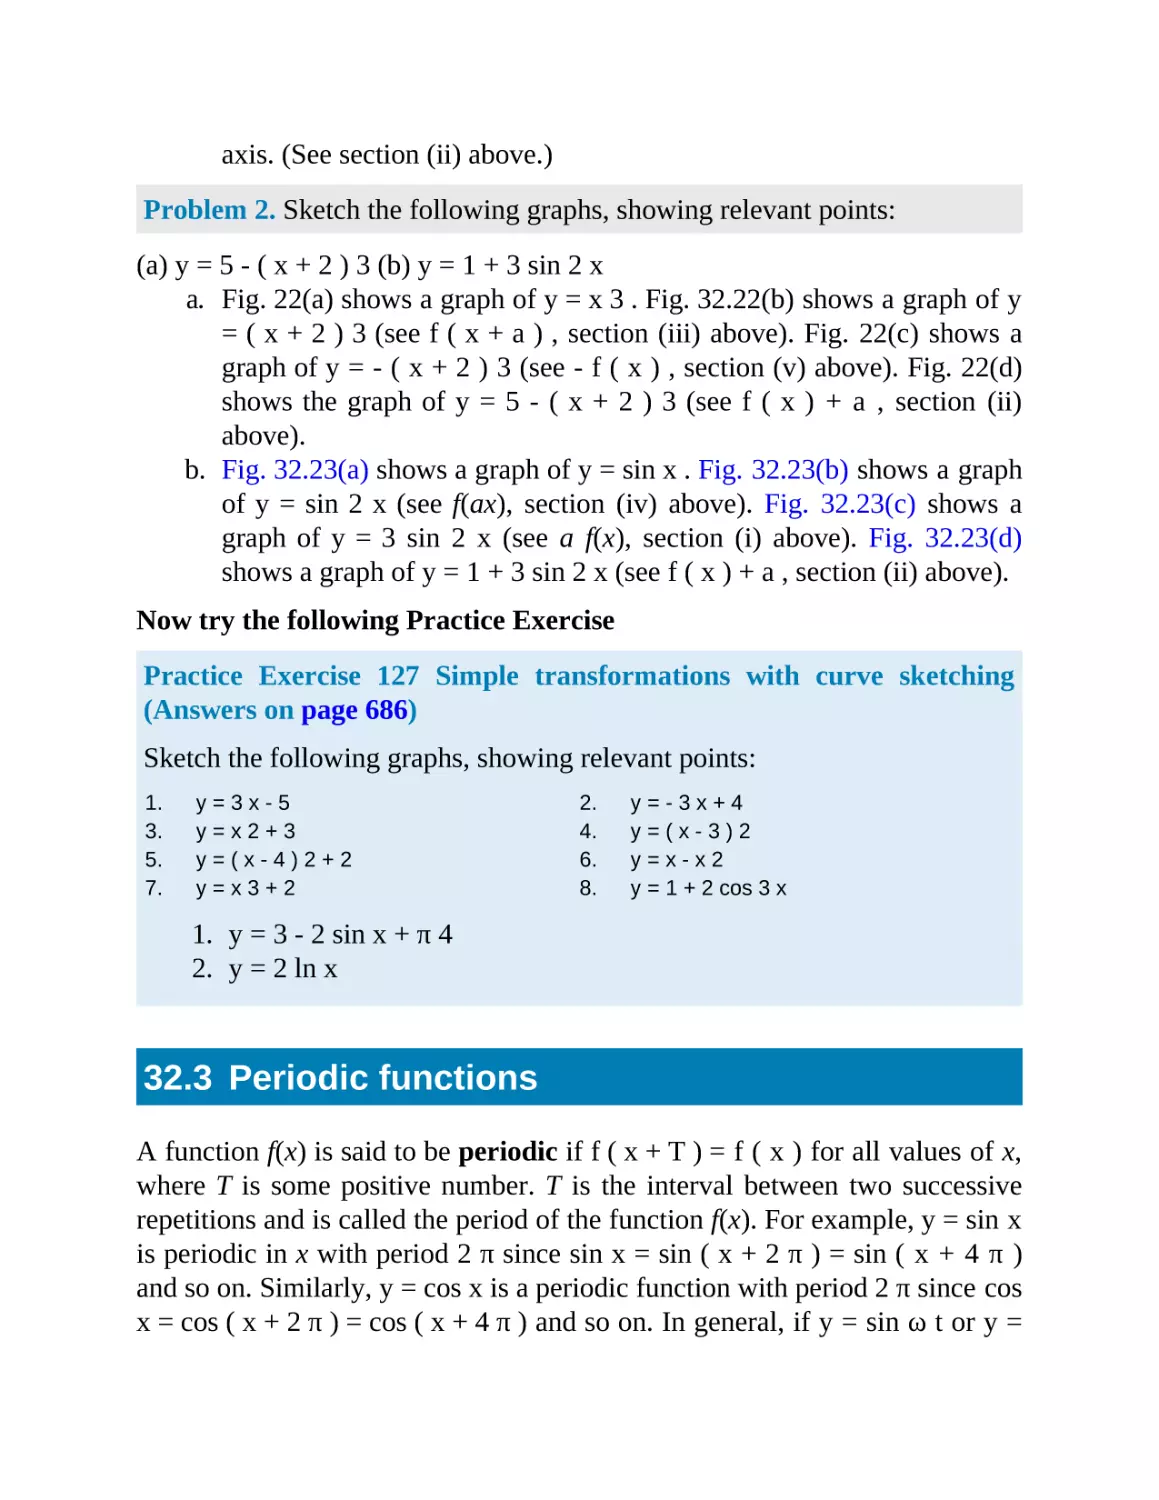 32.3 Periodic functions